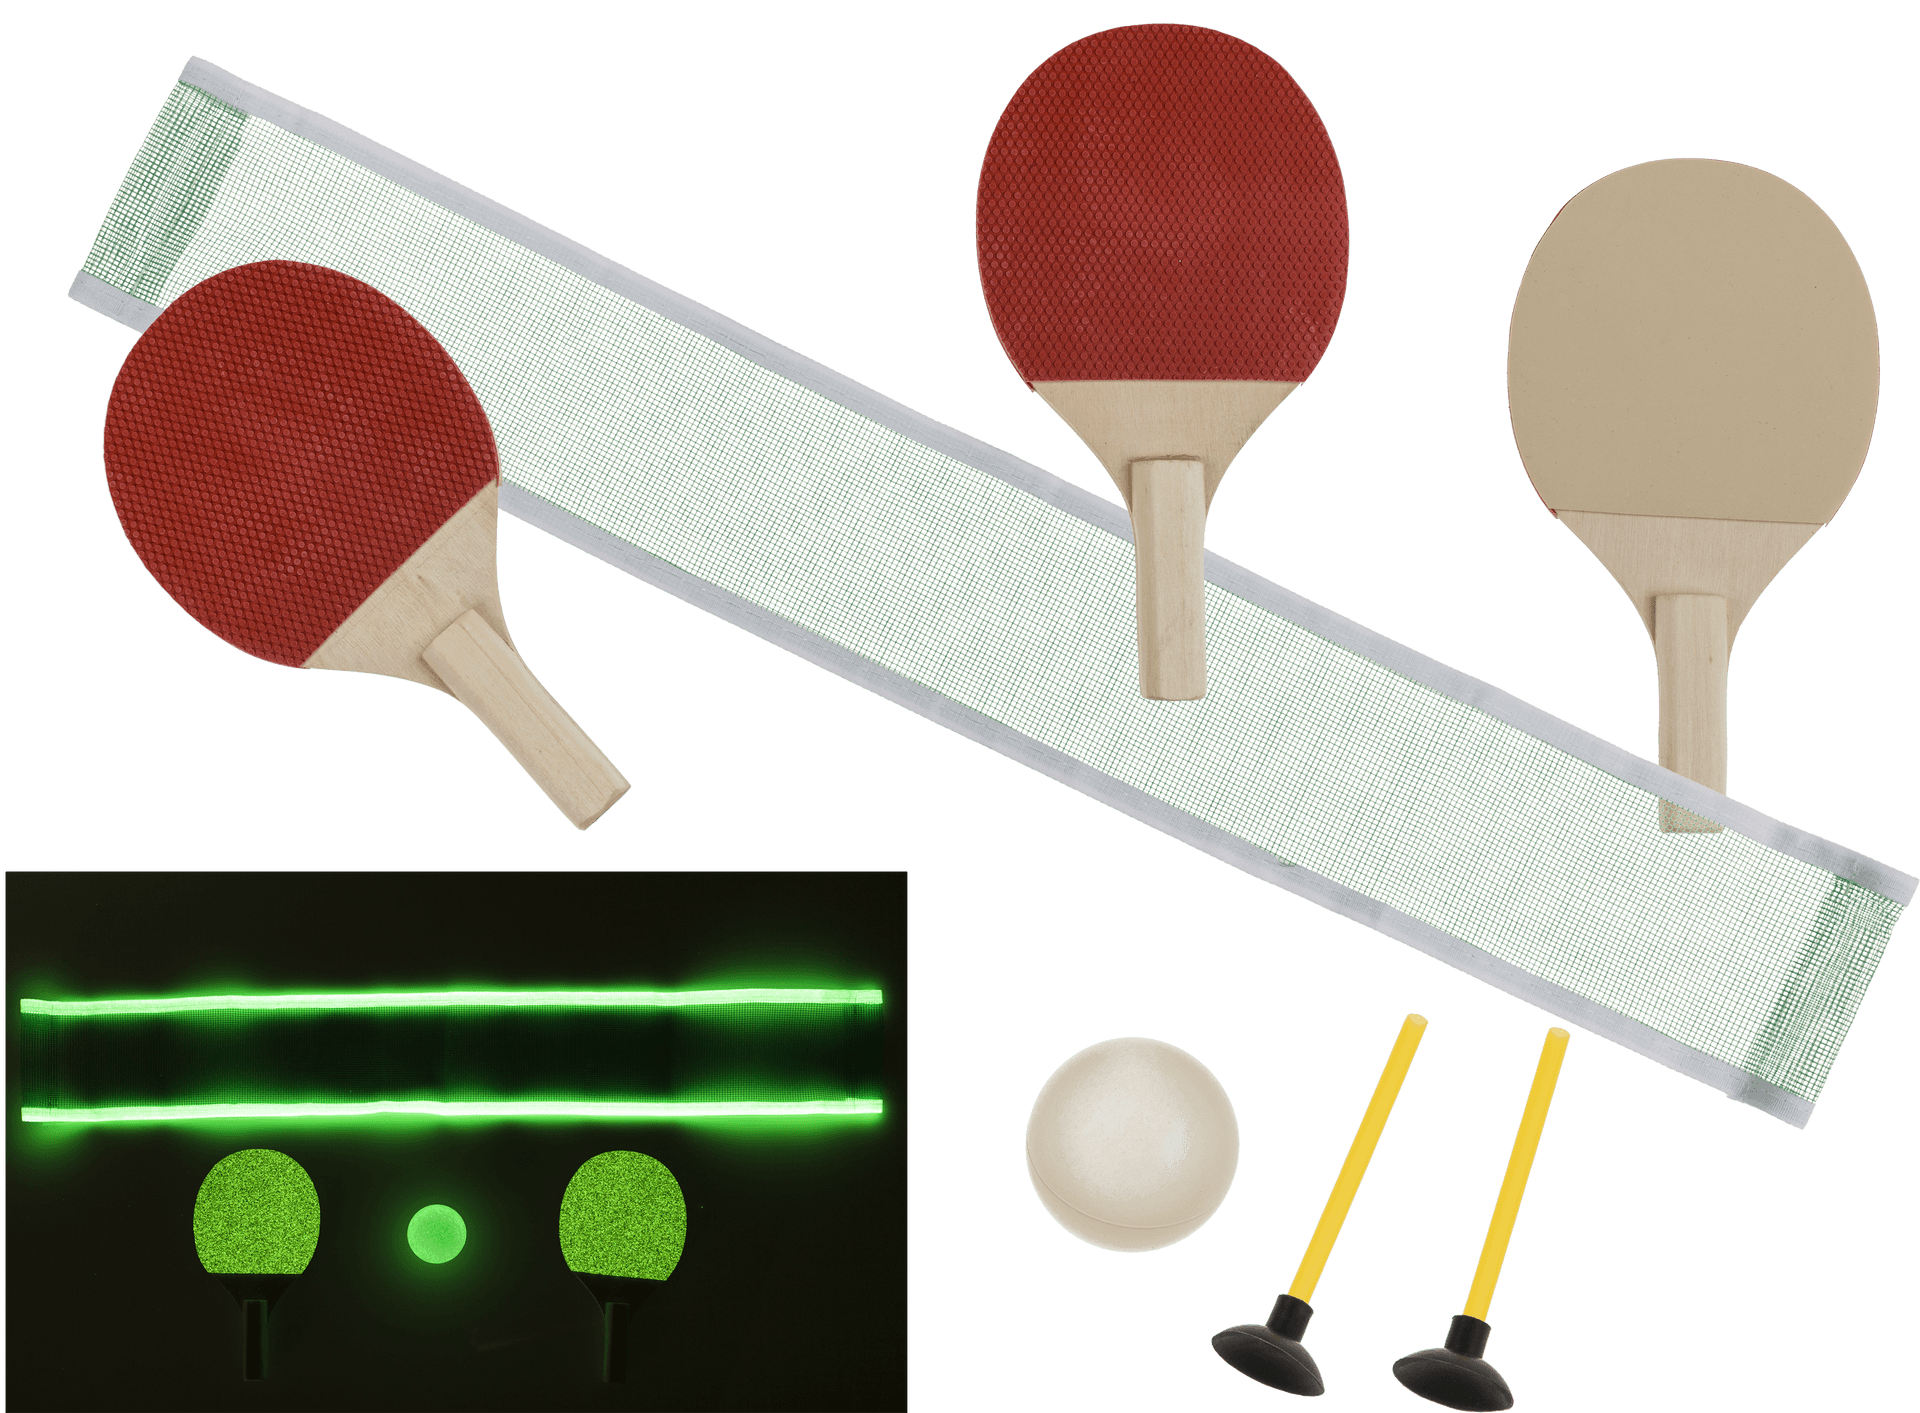 Ping Pong Equipmentand Glow Effect PNG